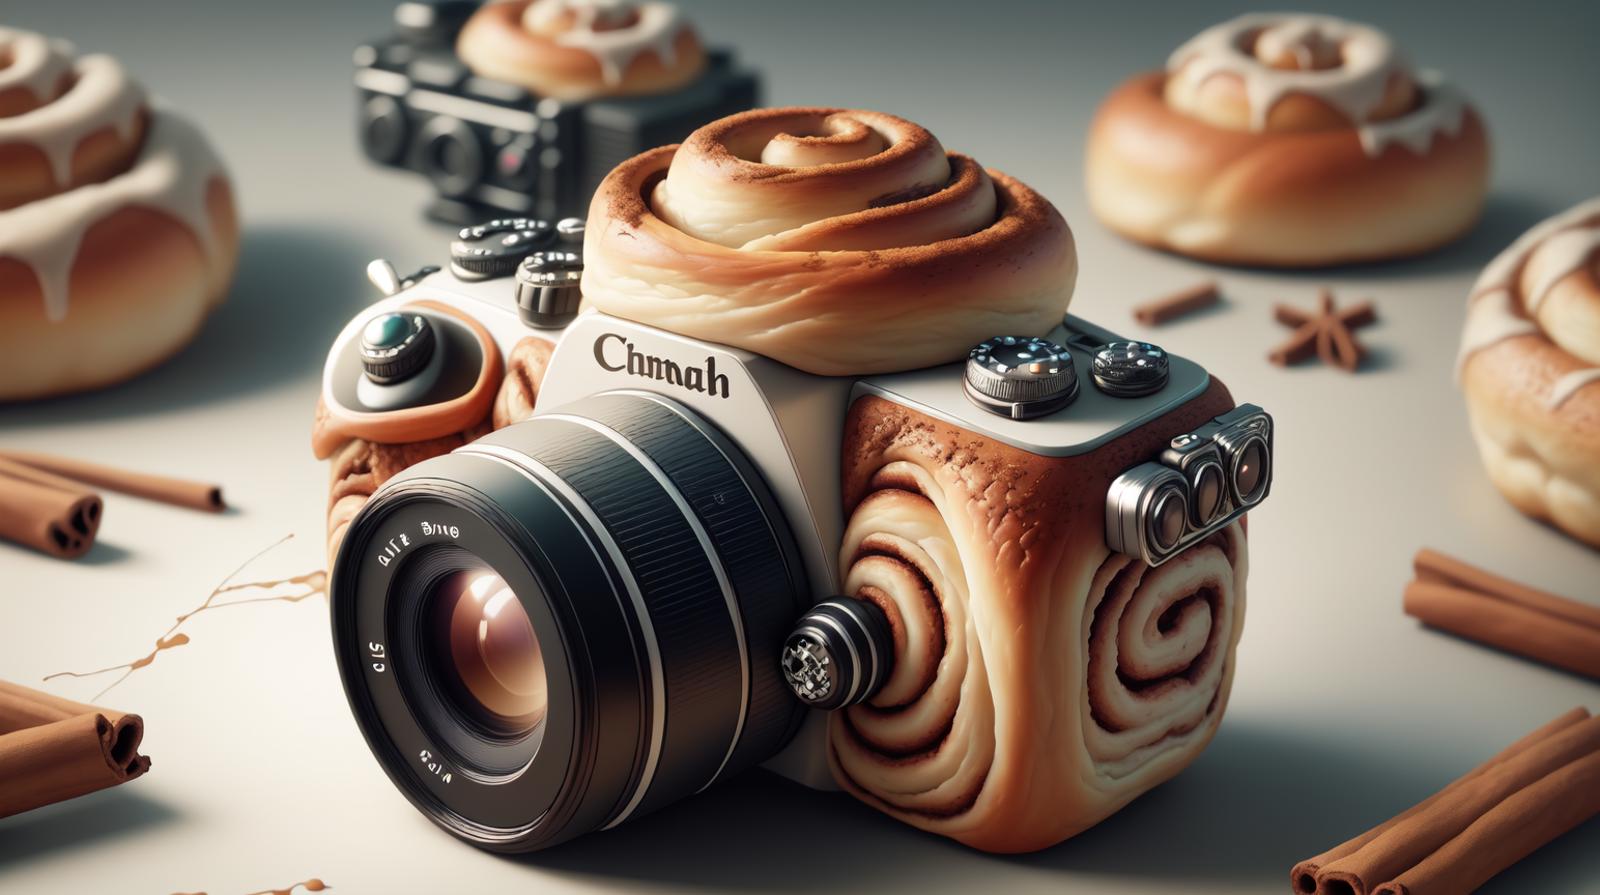 Cinnamon Bun Style - Make anything sweet! image by mnemic